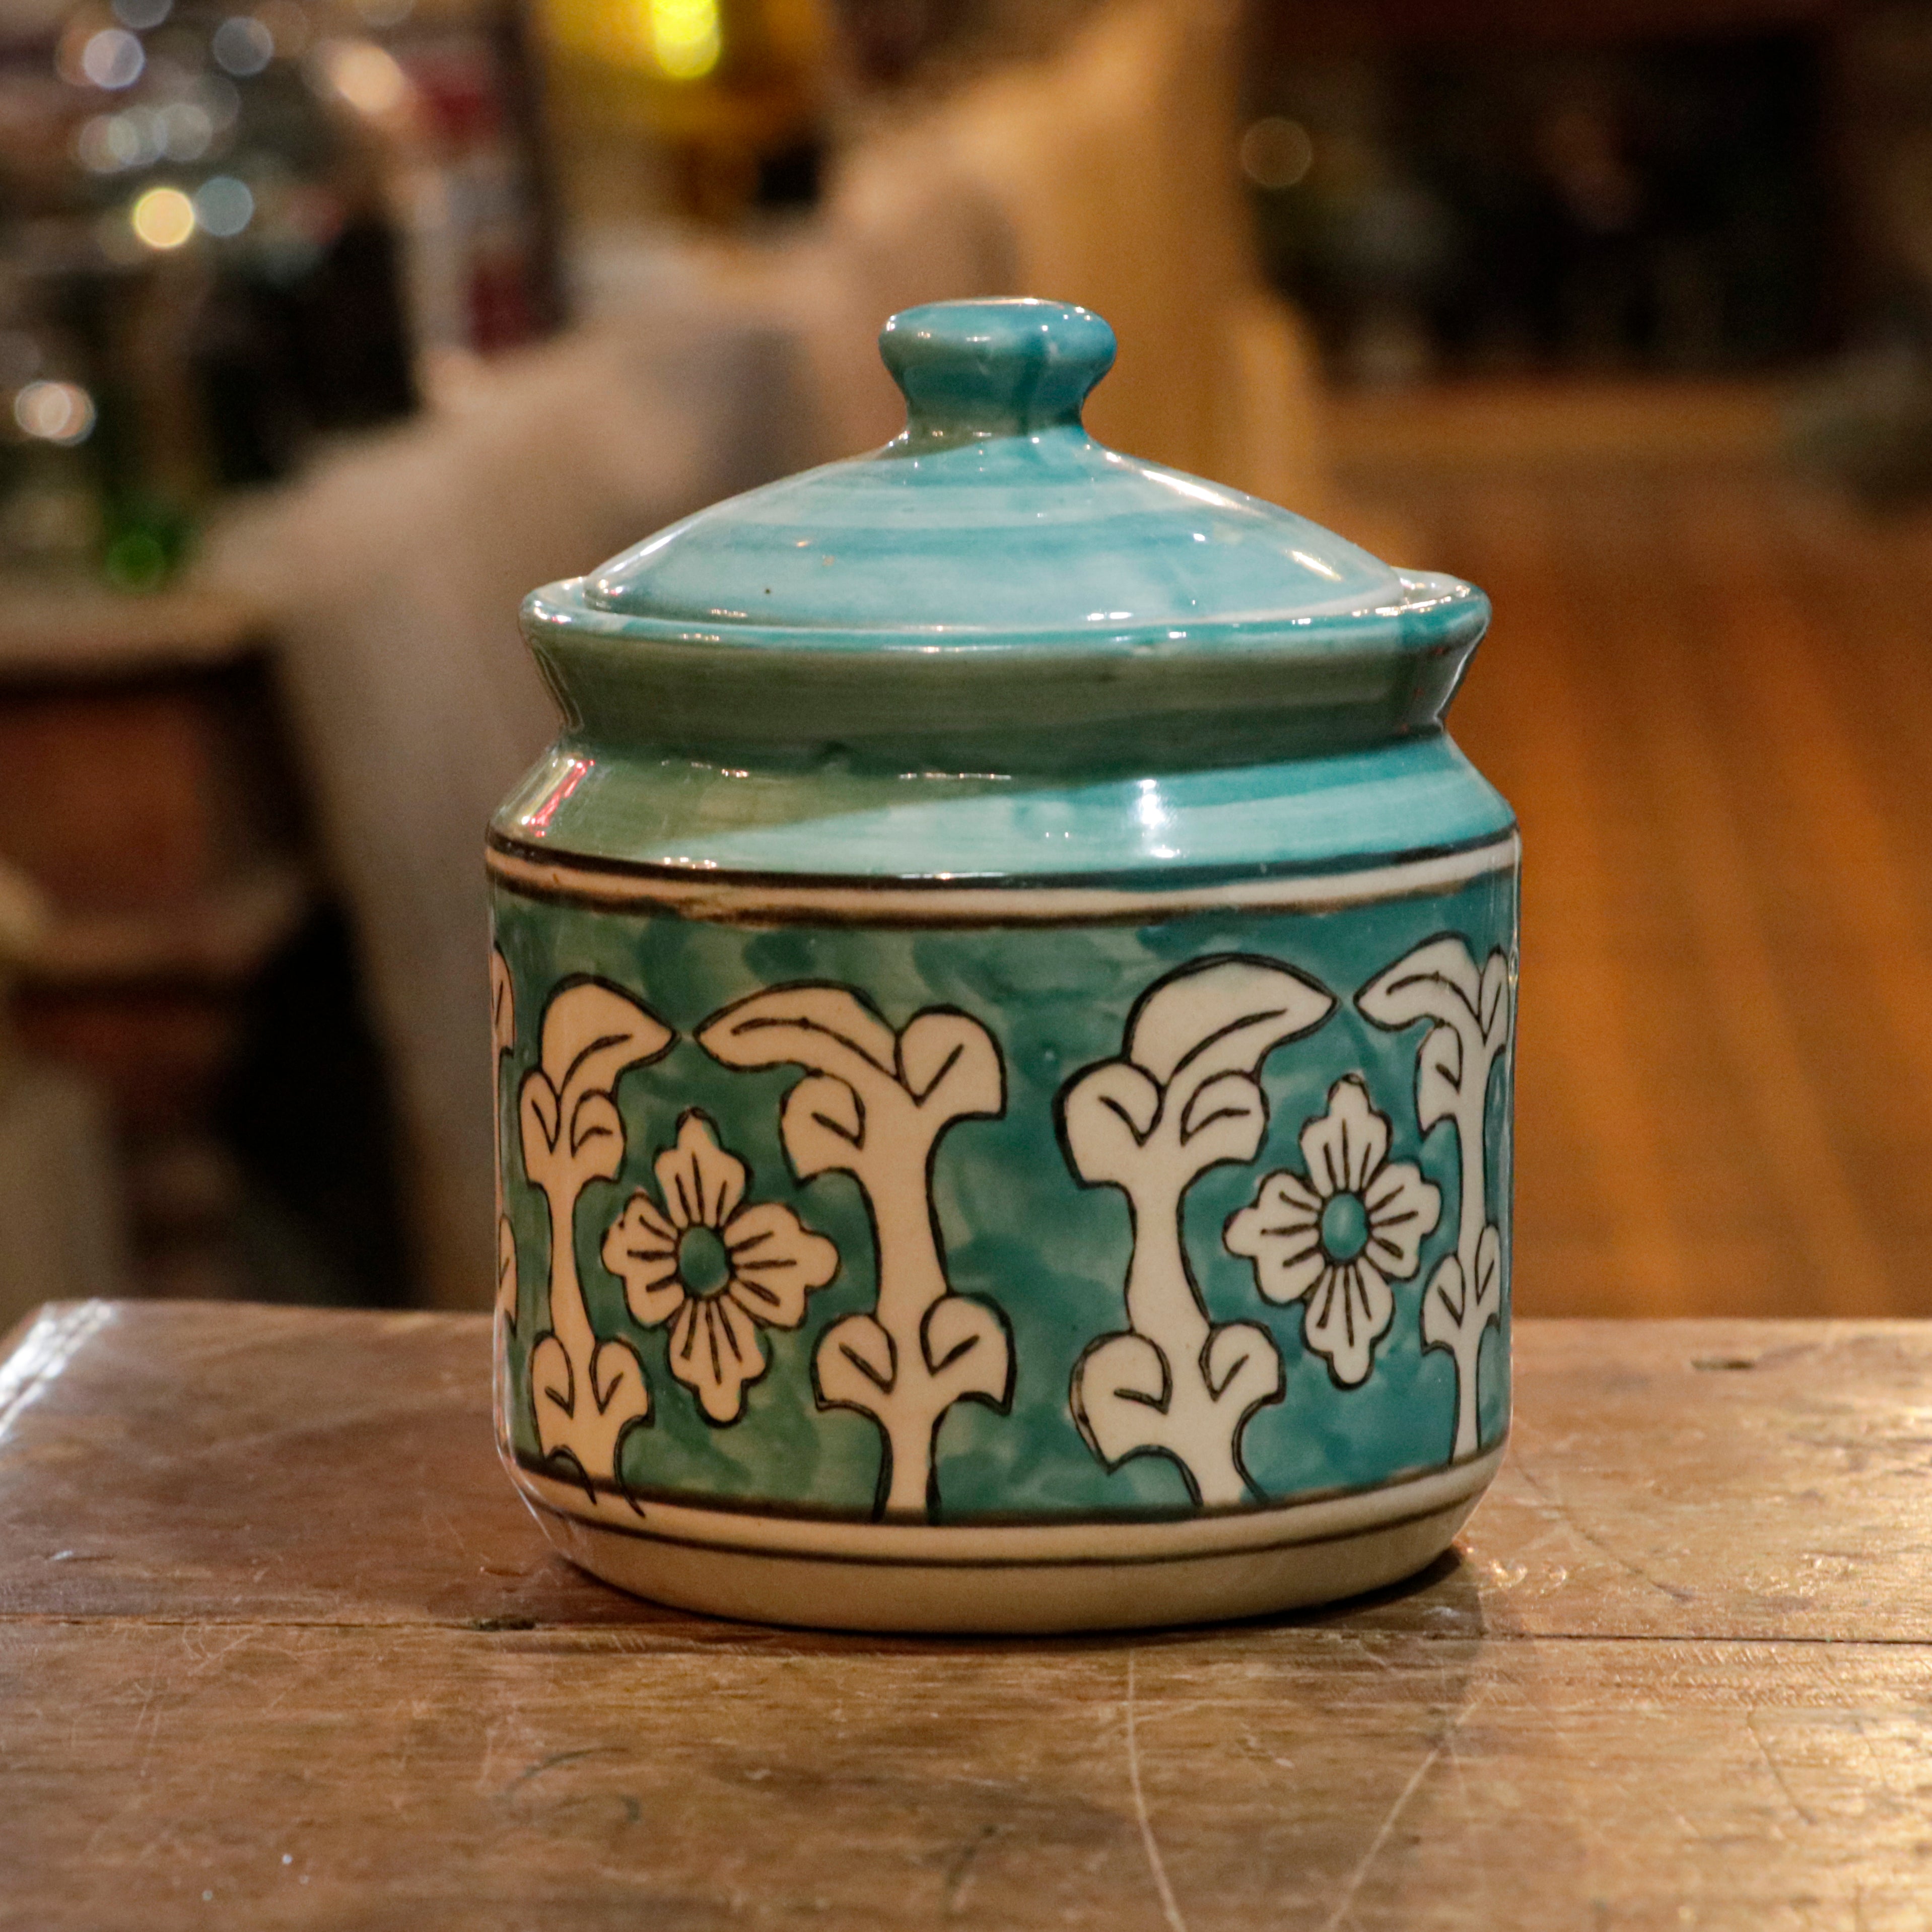 Irish Montage Flower Hand-Painted Ceramic Pickle Storage Jar - Large Ceramic jar